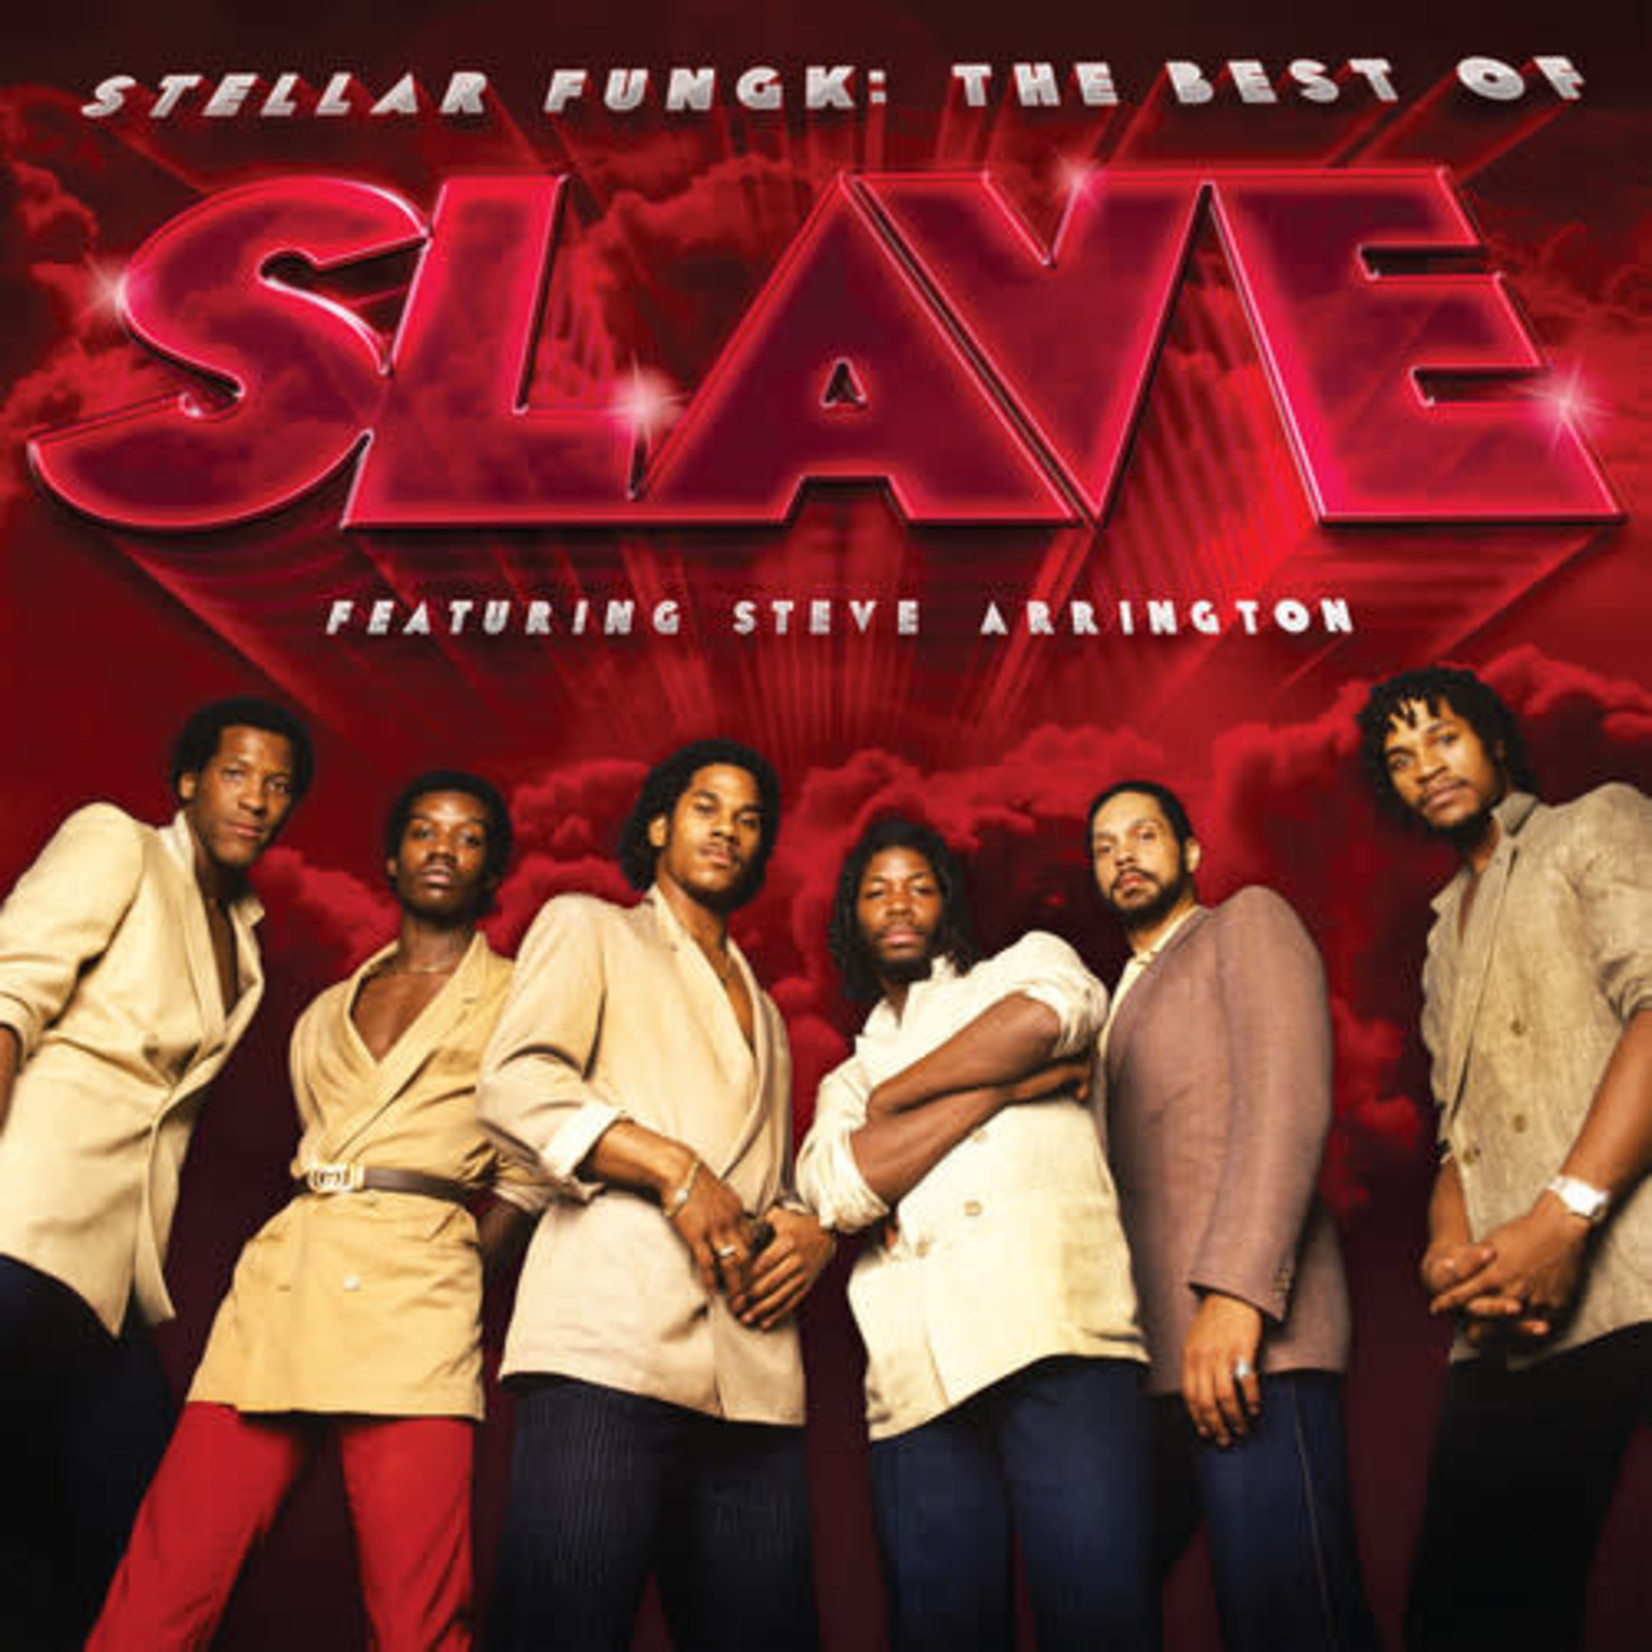 Slave - Stellar Fungk: The Best Of Slave Featuring Steve Arrington (Coloured Vinyl) [2LP]